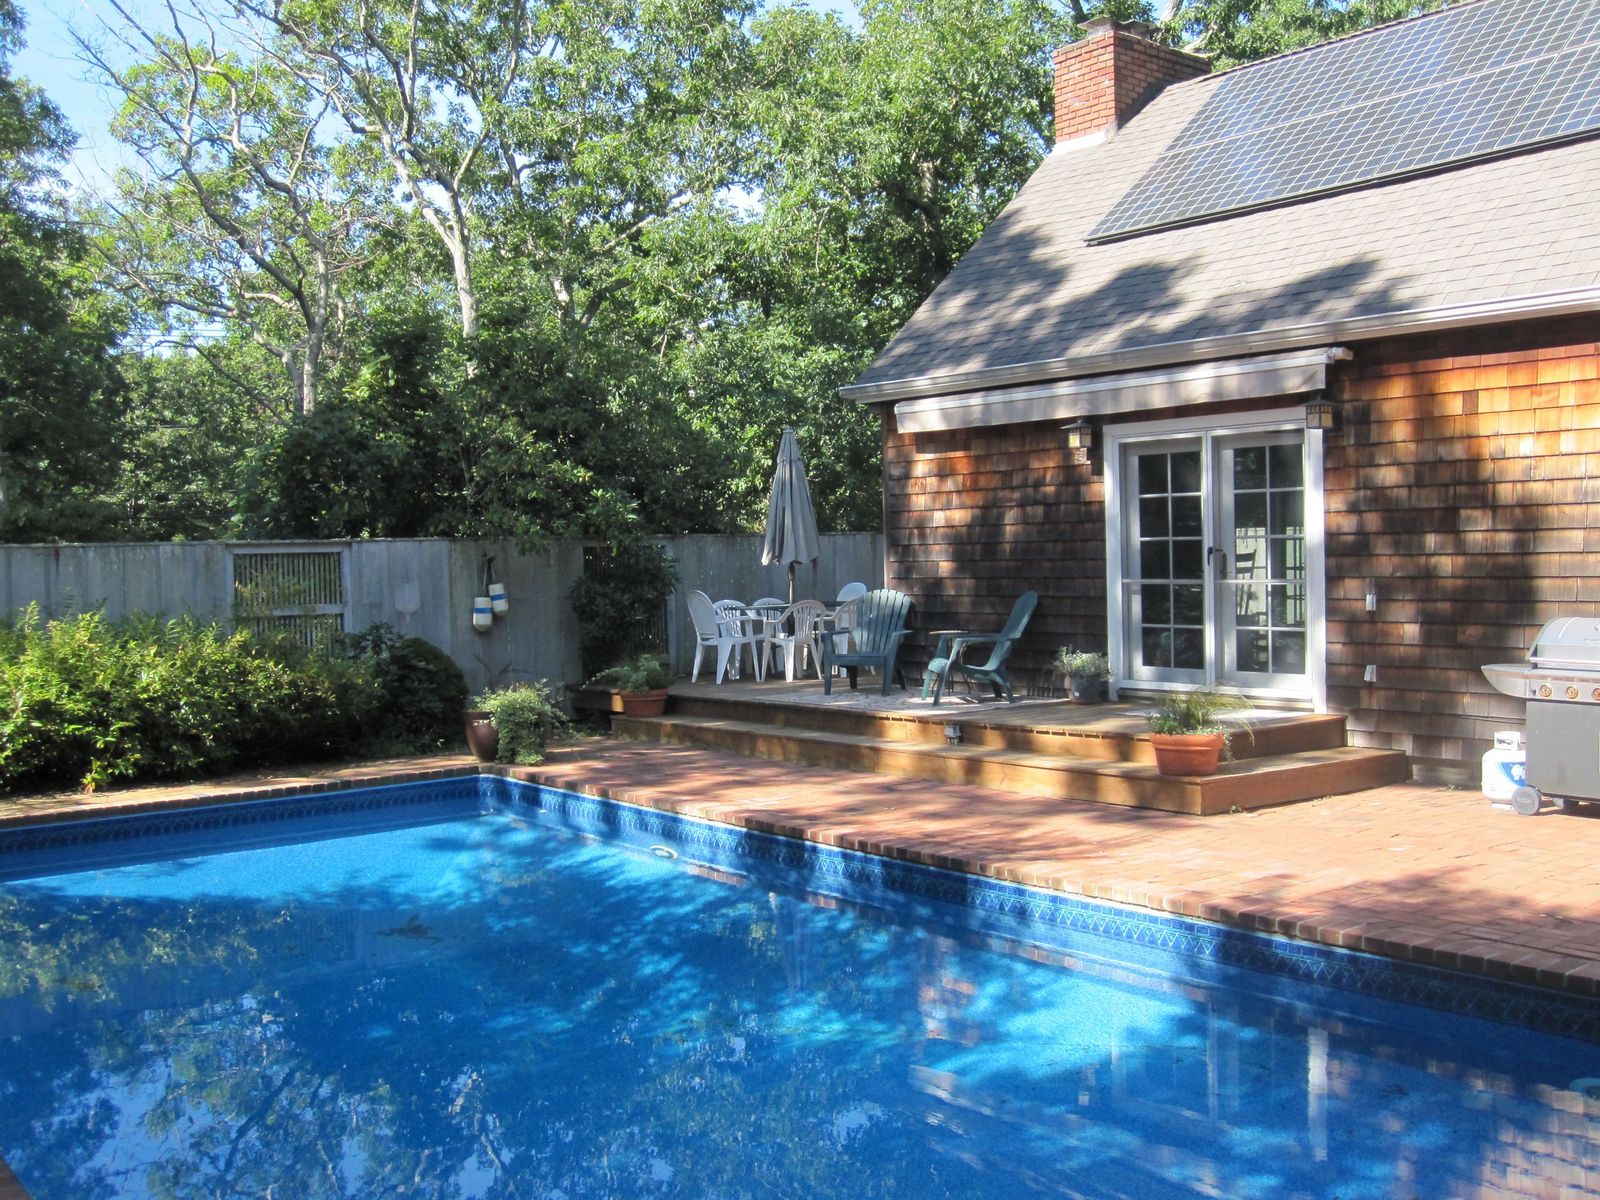 Rental Property at East Hampton, East Hampton, Hamptons, NY - Bedrooms: 3 
Bathrooms: 2.5  - $22,000 MO.